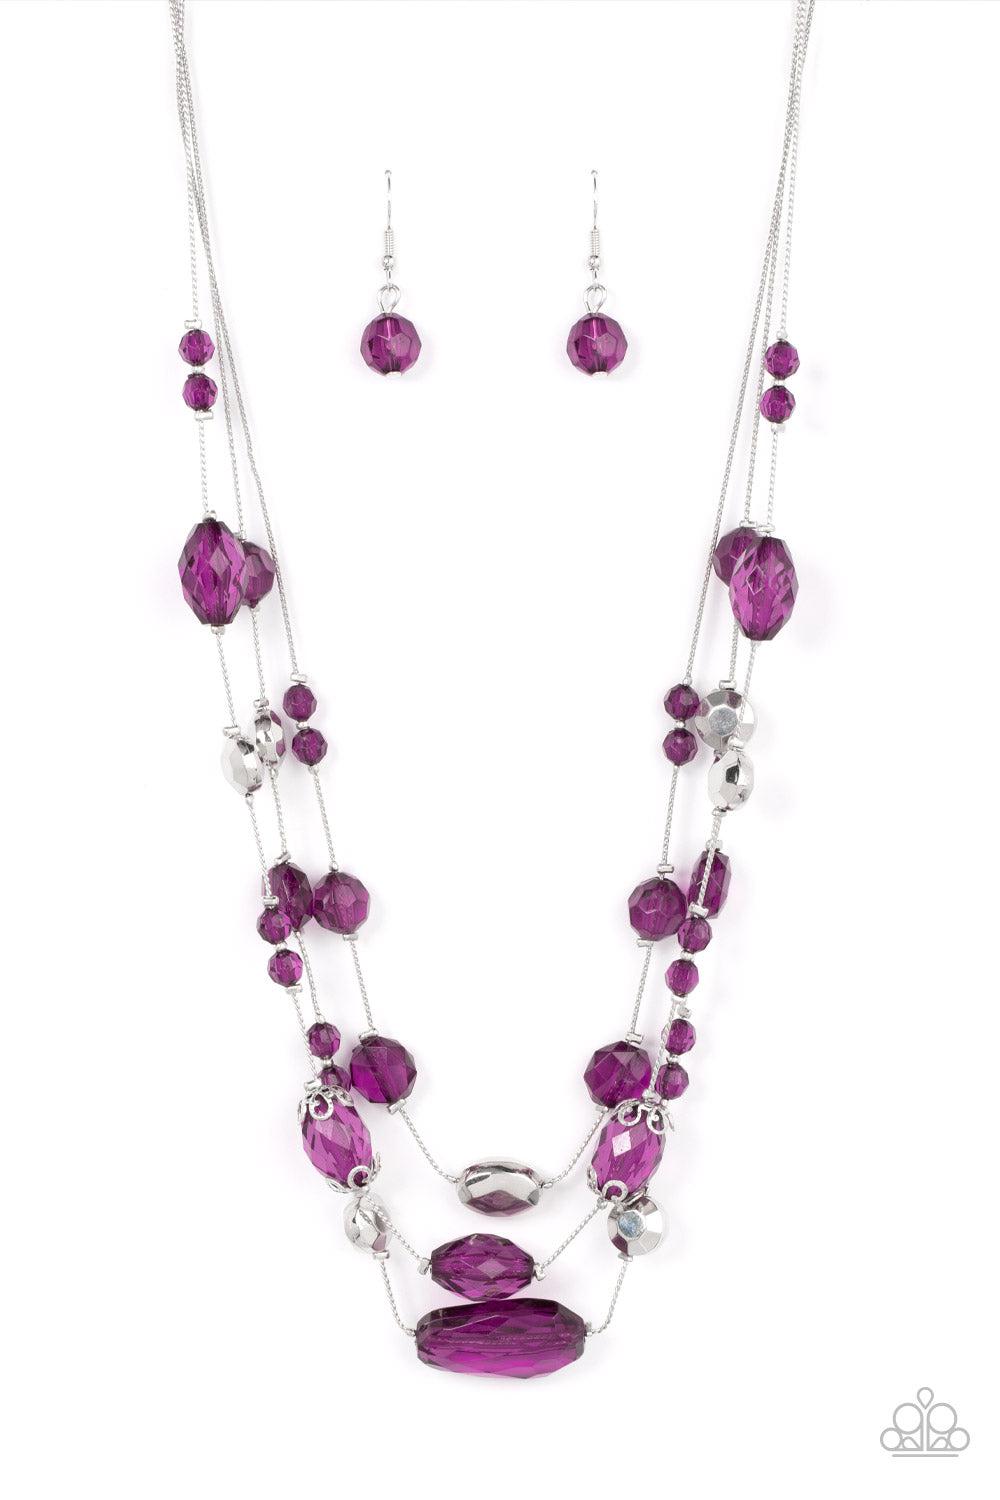 Prismatic Pose Purple Necklace - Paparazzi Accessories- lightbox - CarasShop.com - $5 Jewelry by Cara Jewels